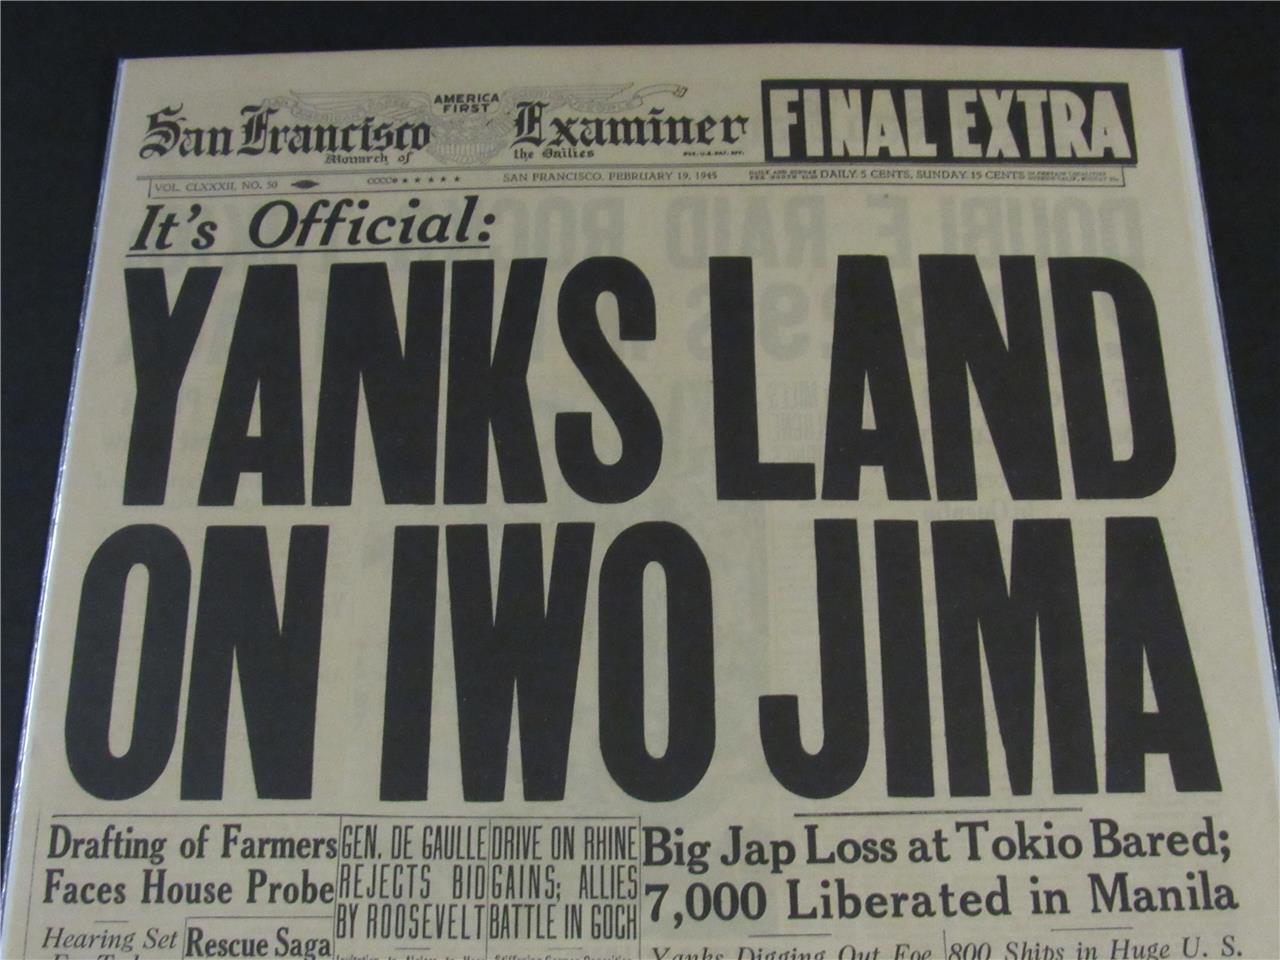 VINTAGE NEWSPAPER HEADLINES ~ WORLD WAR 2  MARINES LAND IWO JIMA JAPAN WWII 1945